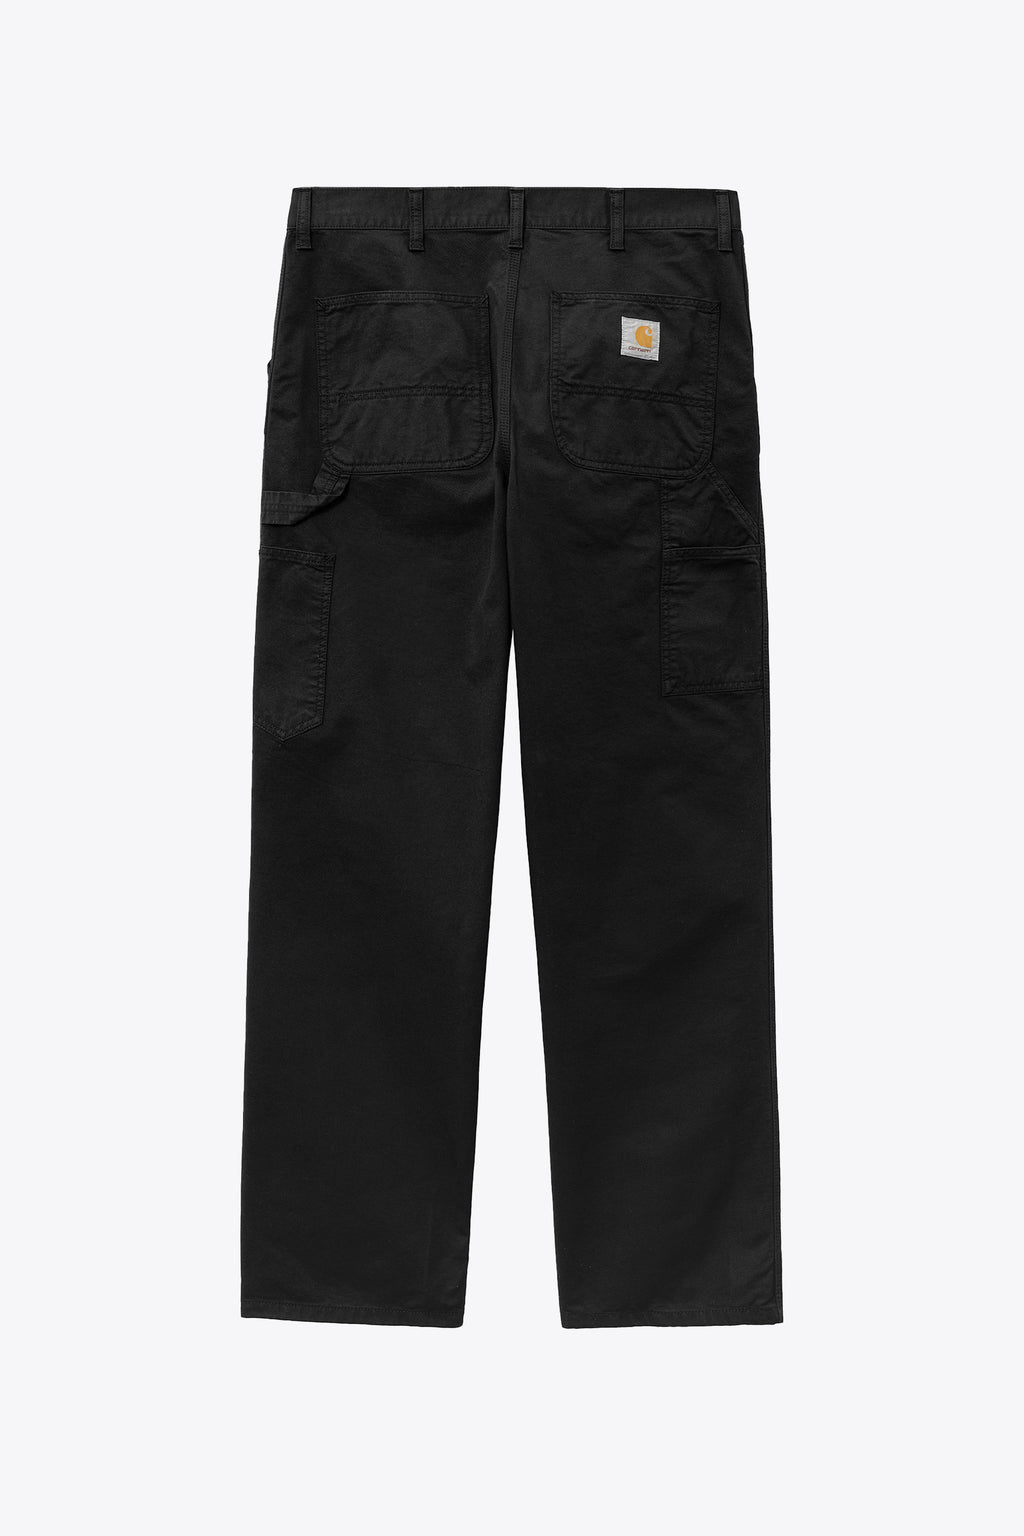 alt-image__Pantalone-workwear-in-drill-di-cotone-nero---Single-Knee-Pant